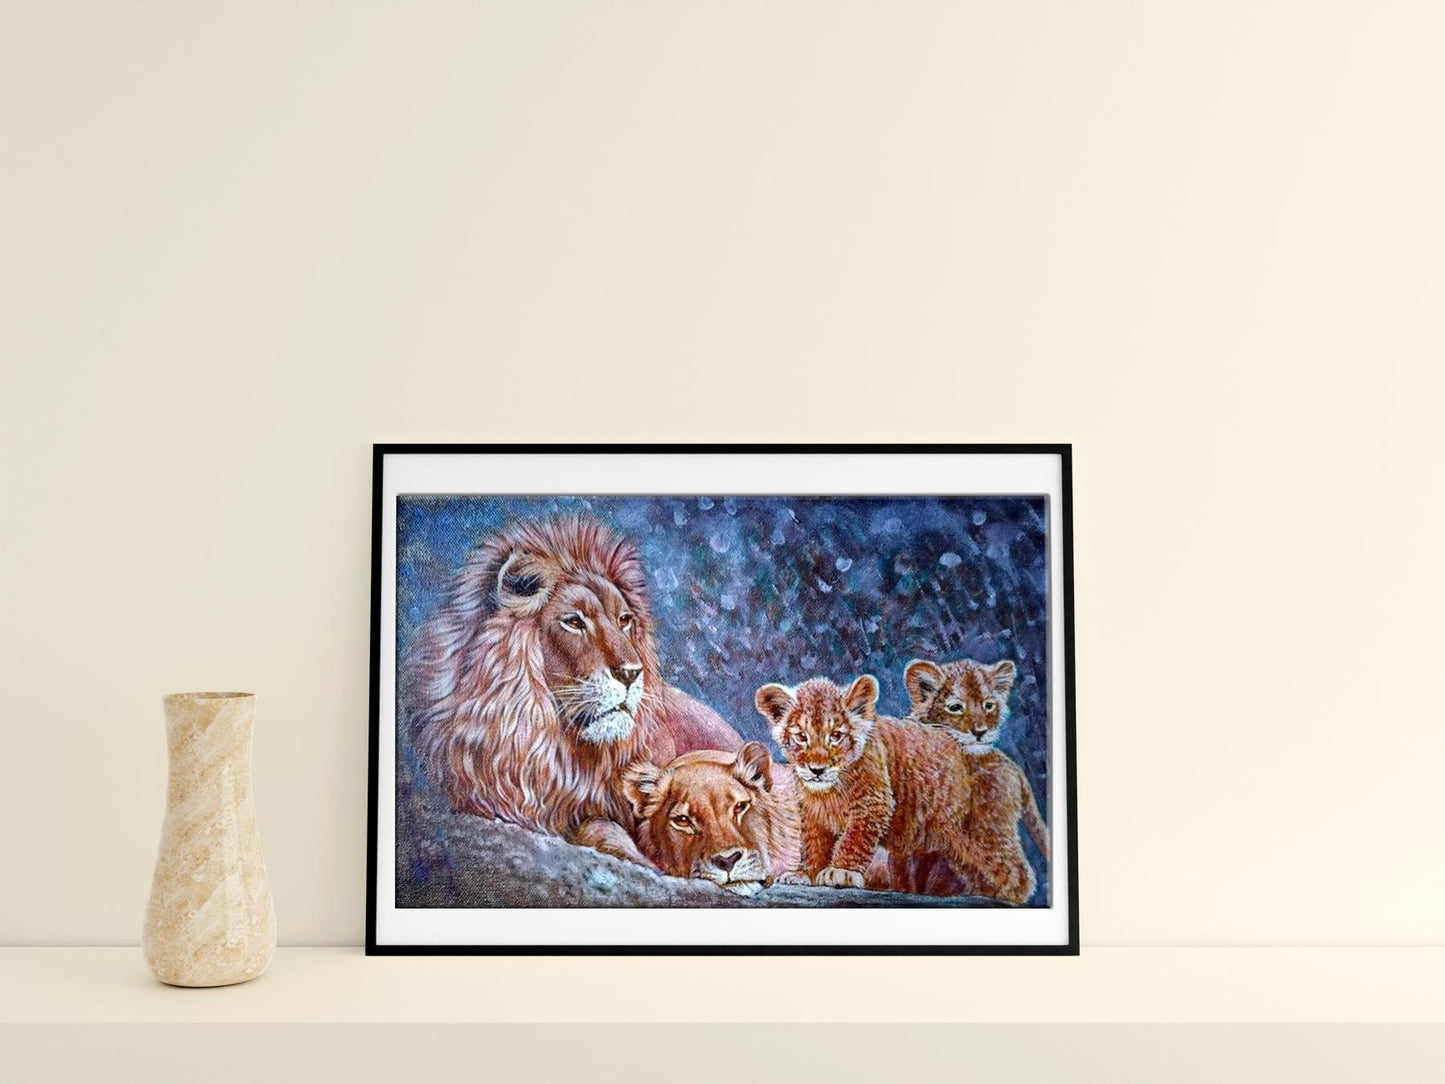 An oil artwork by Goncharenko V. V. depicting a family of lions